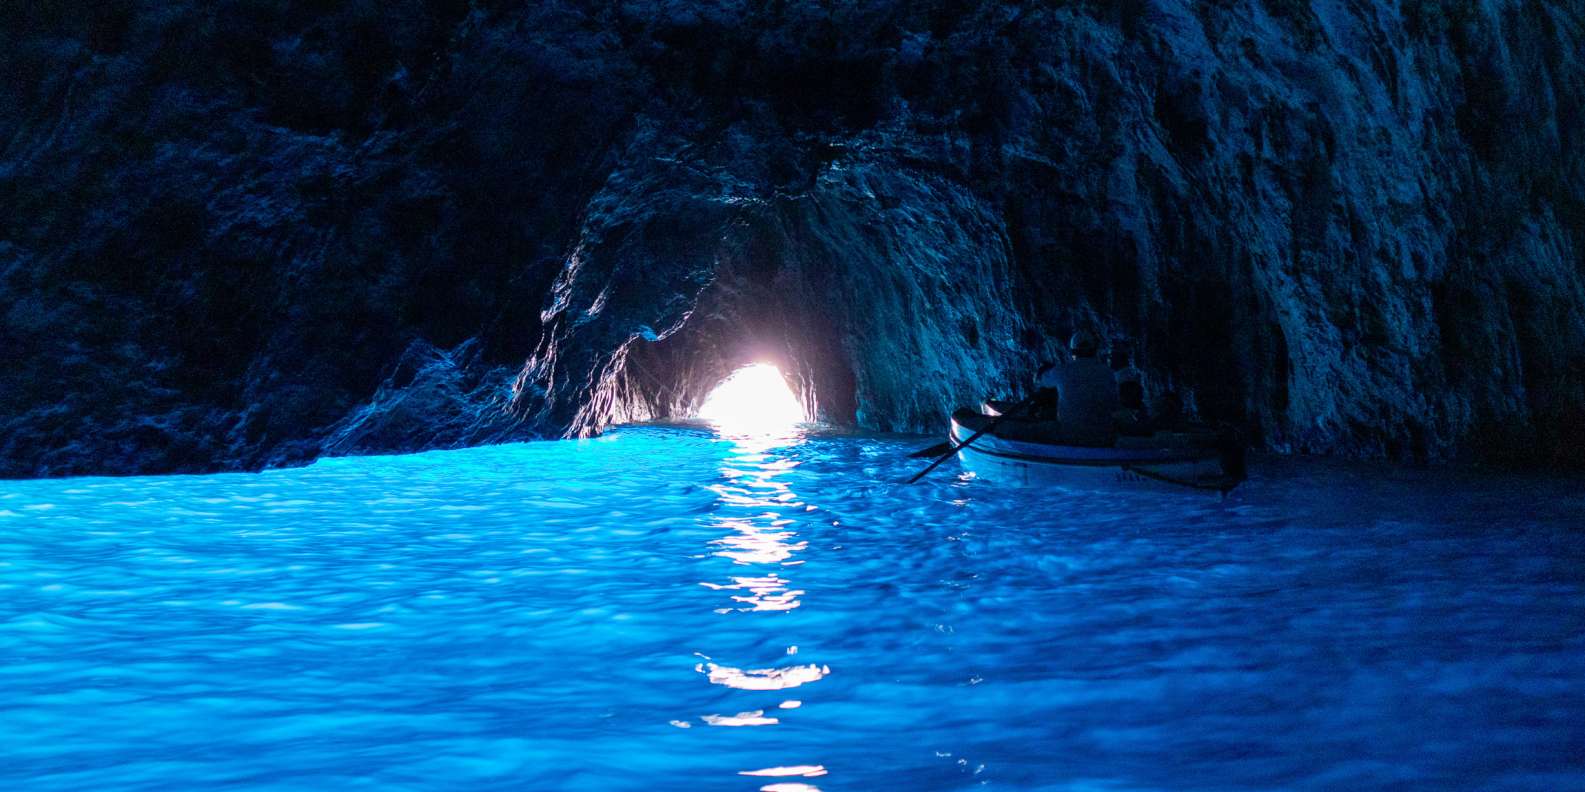 Pravana - grotto blue b a b y 💦